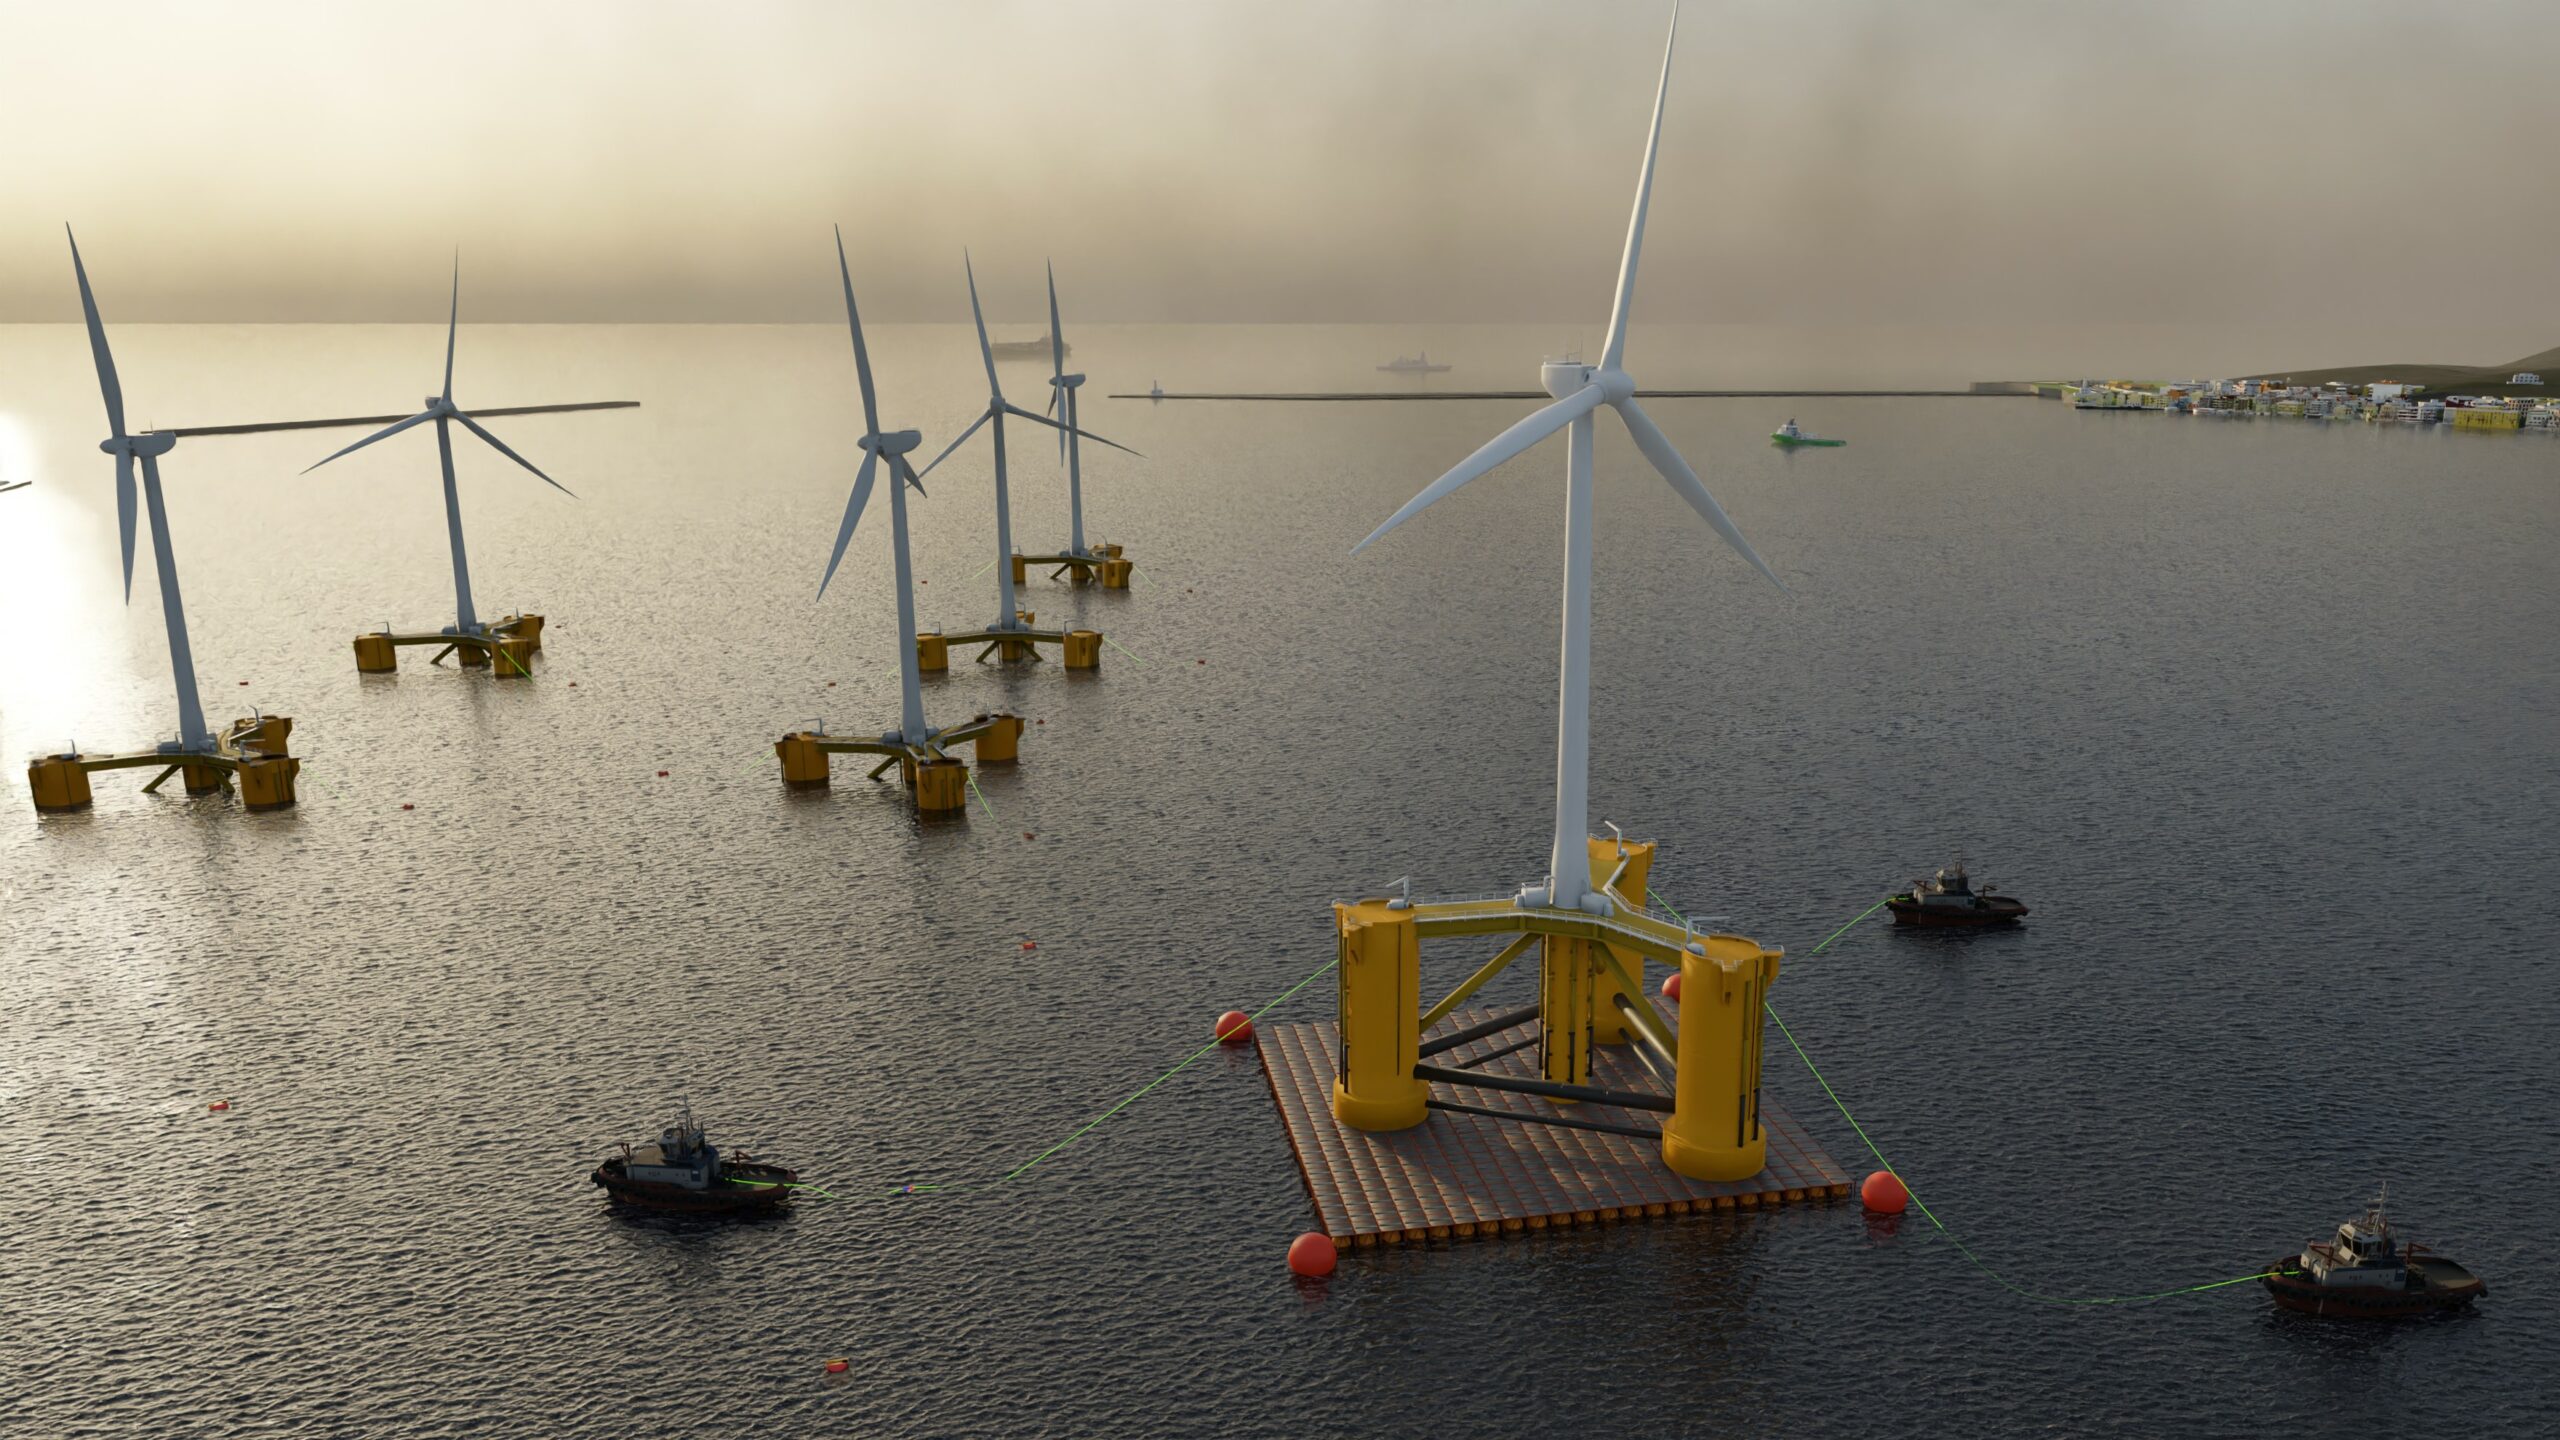 MEMBER NEWS: EMEC concludes concept design on 100 MW floating wind test site